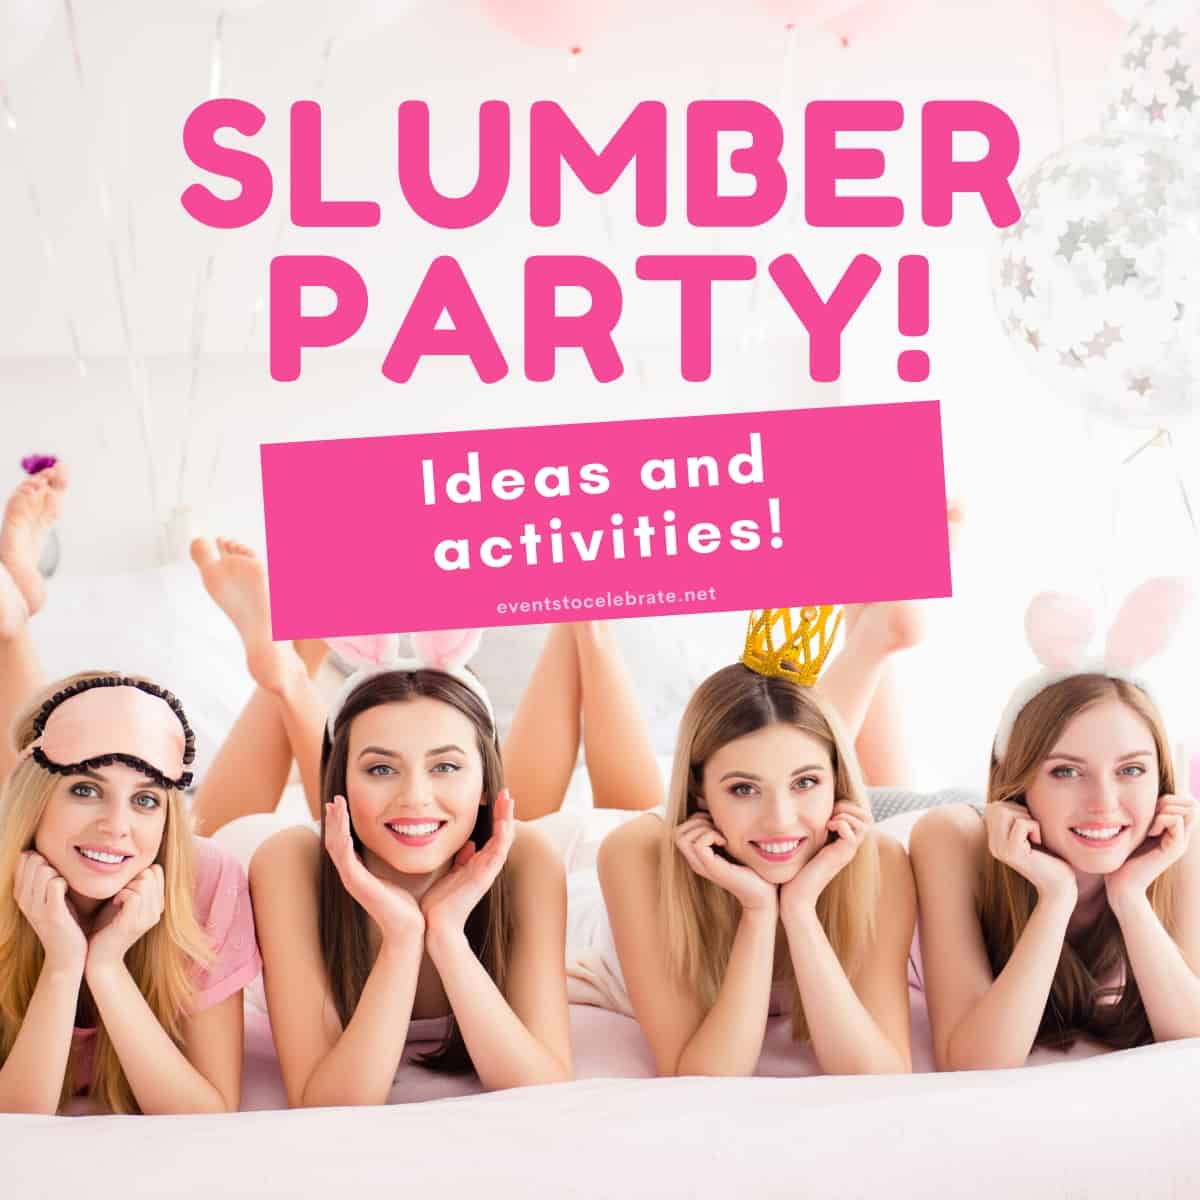 Slumber party ideas! 